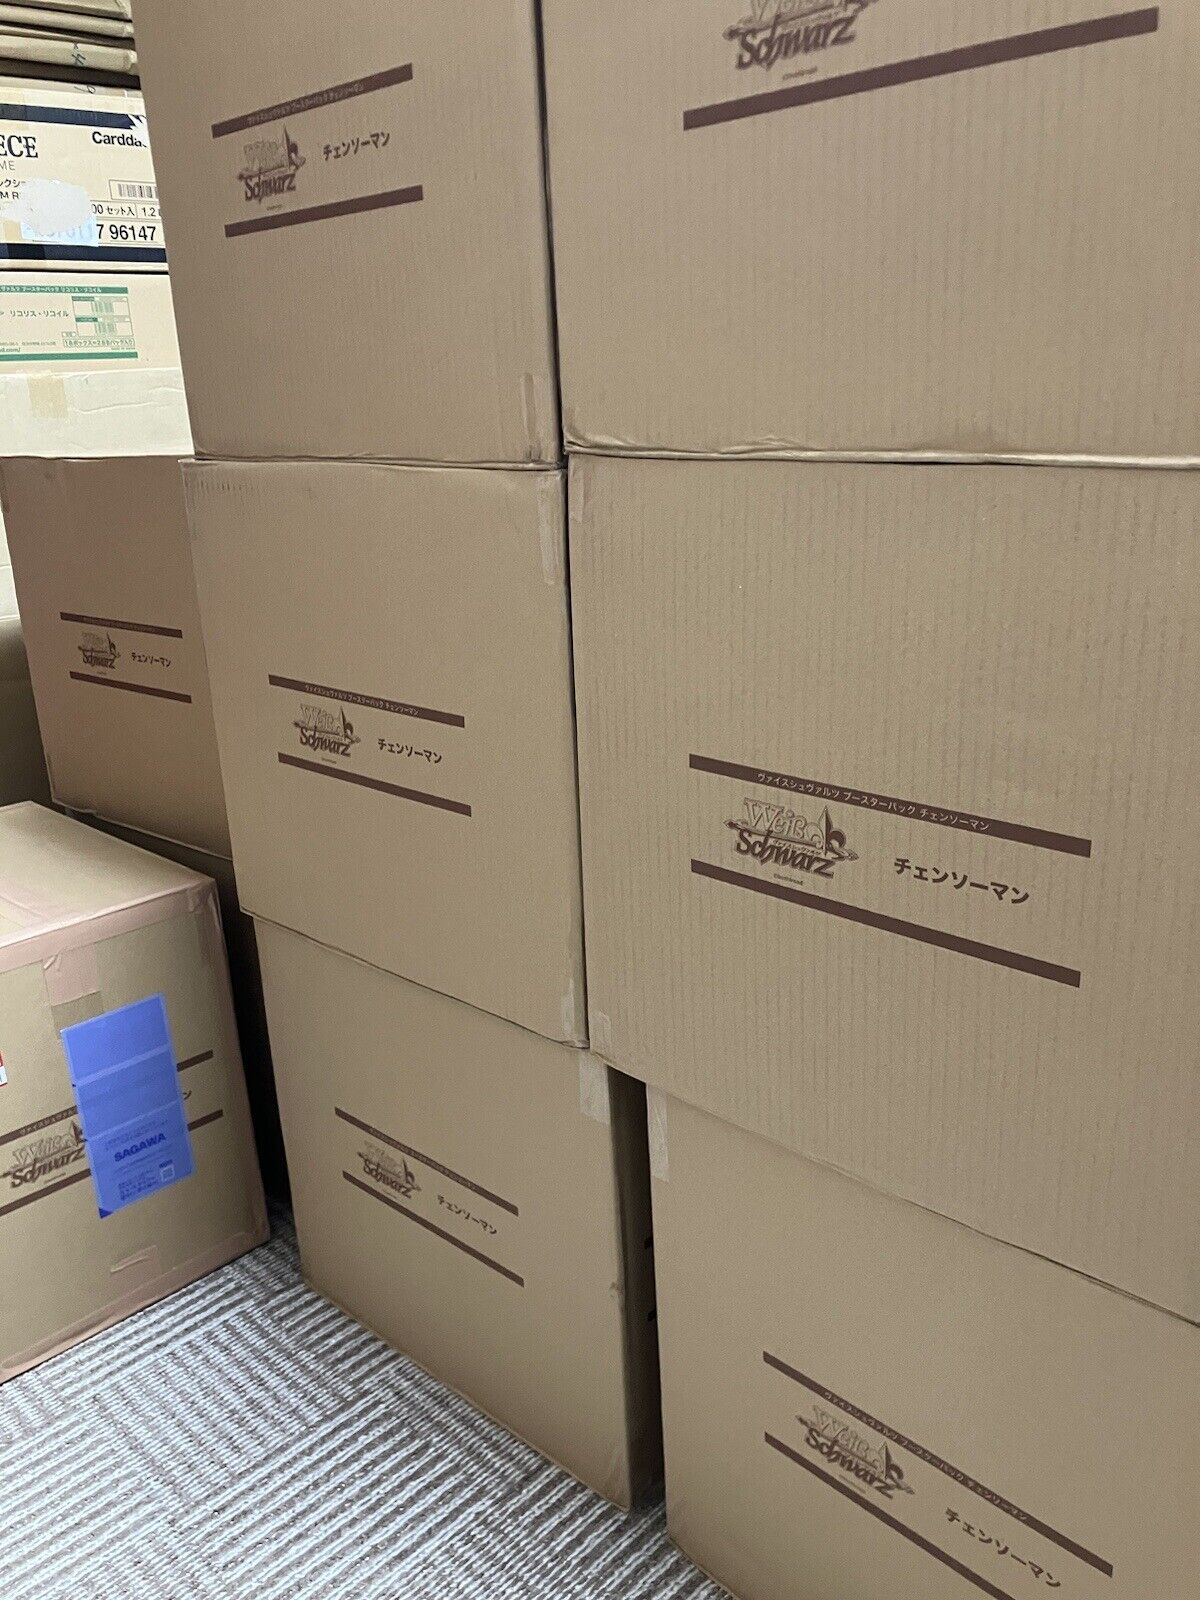 Weiss Schwarz Spy x Family Case 18 Boxes Japanese FedEx Japanses